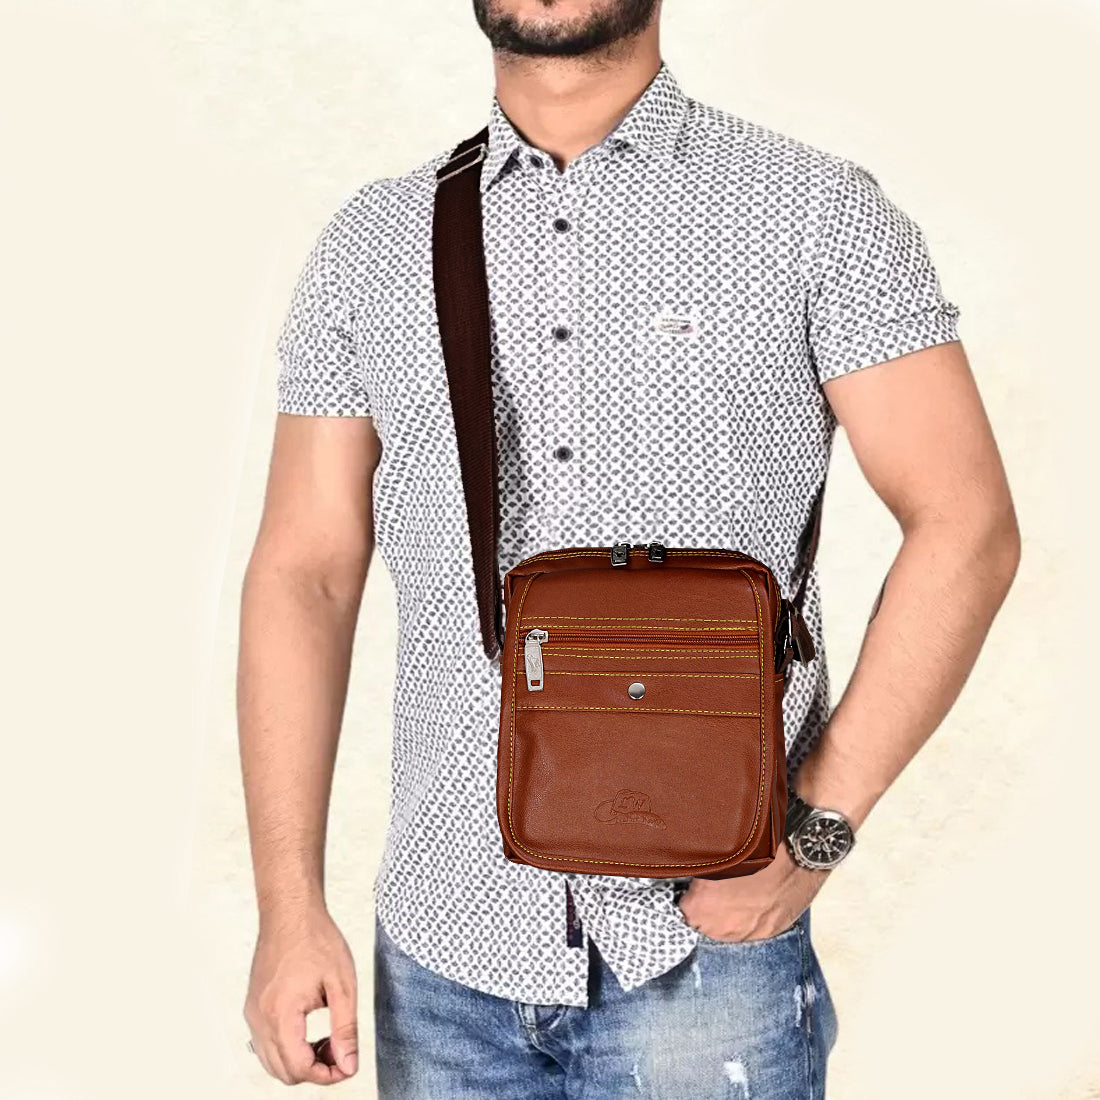 Leather World PU Leather Sling Cross Body Travel Office Business Messenger Bag for Men Women (18x8x23cm) (Tan)